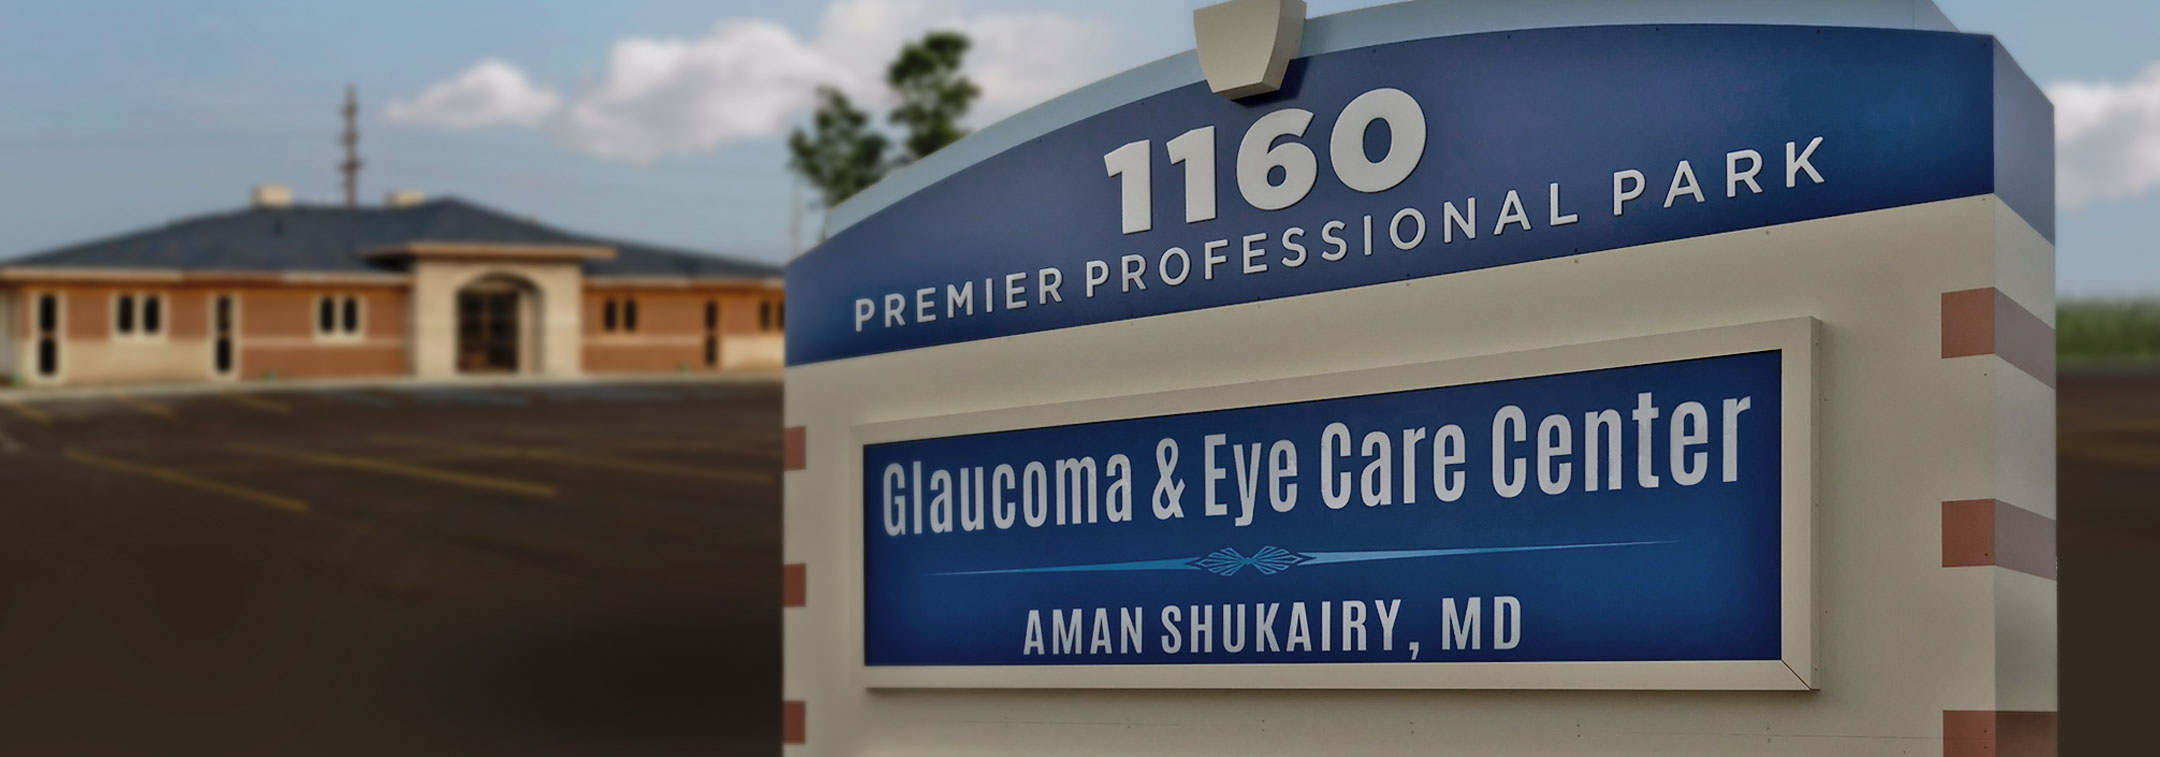 Premier Glaucoma & Eye Center, Flint, Michigan